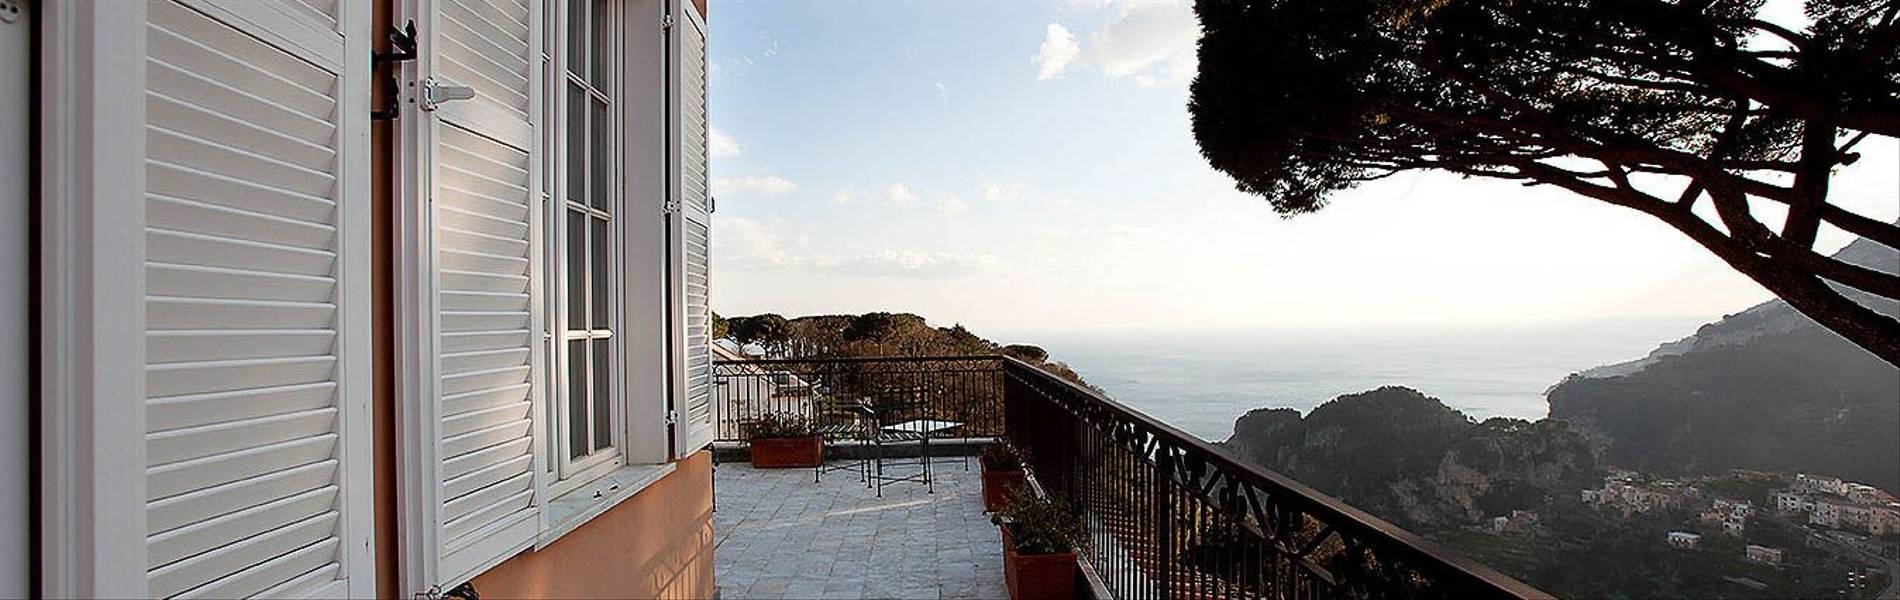 Villa Maria, Amalfi Coast, Italy (9).jpg